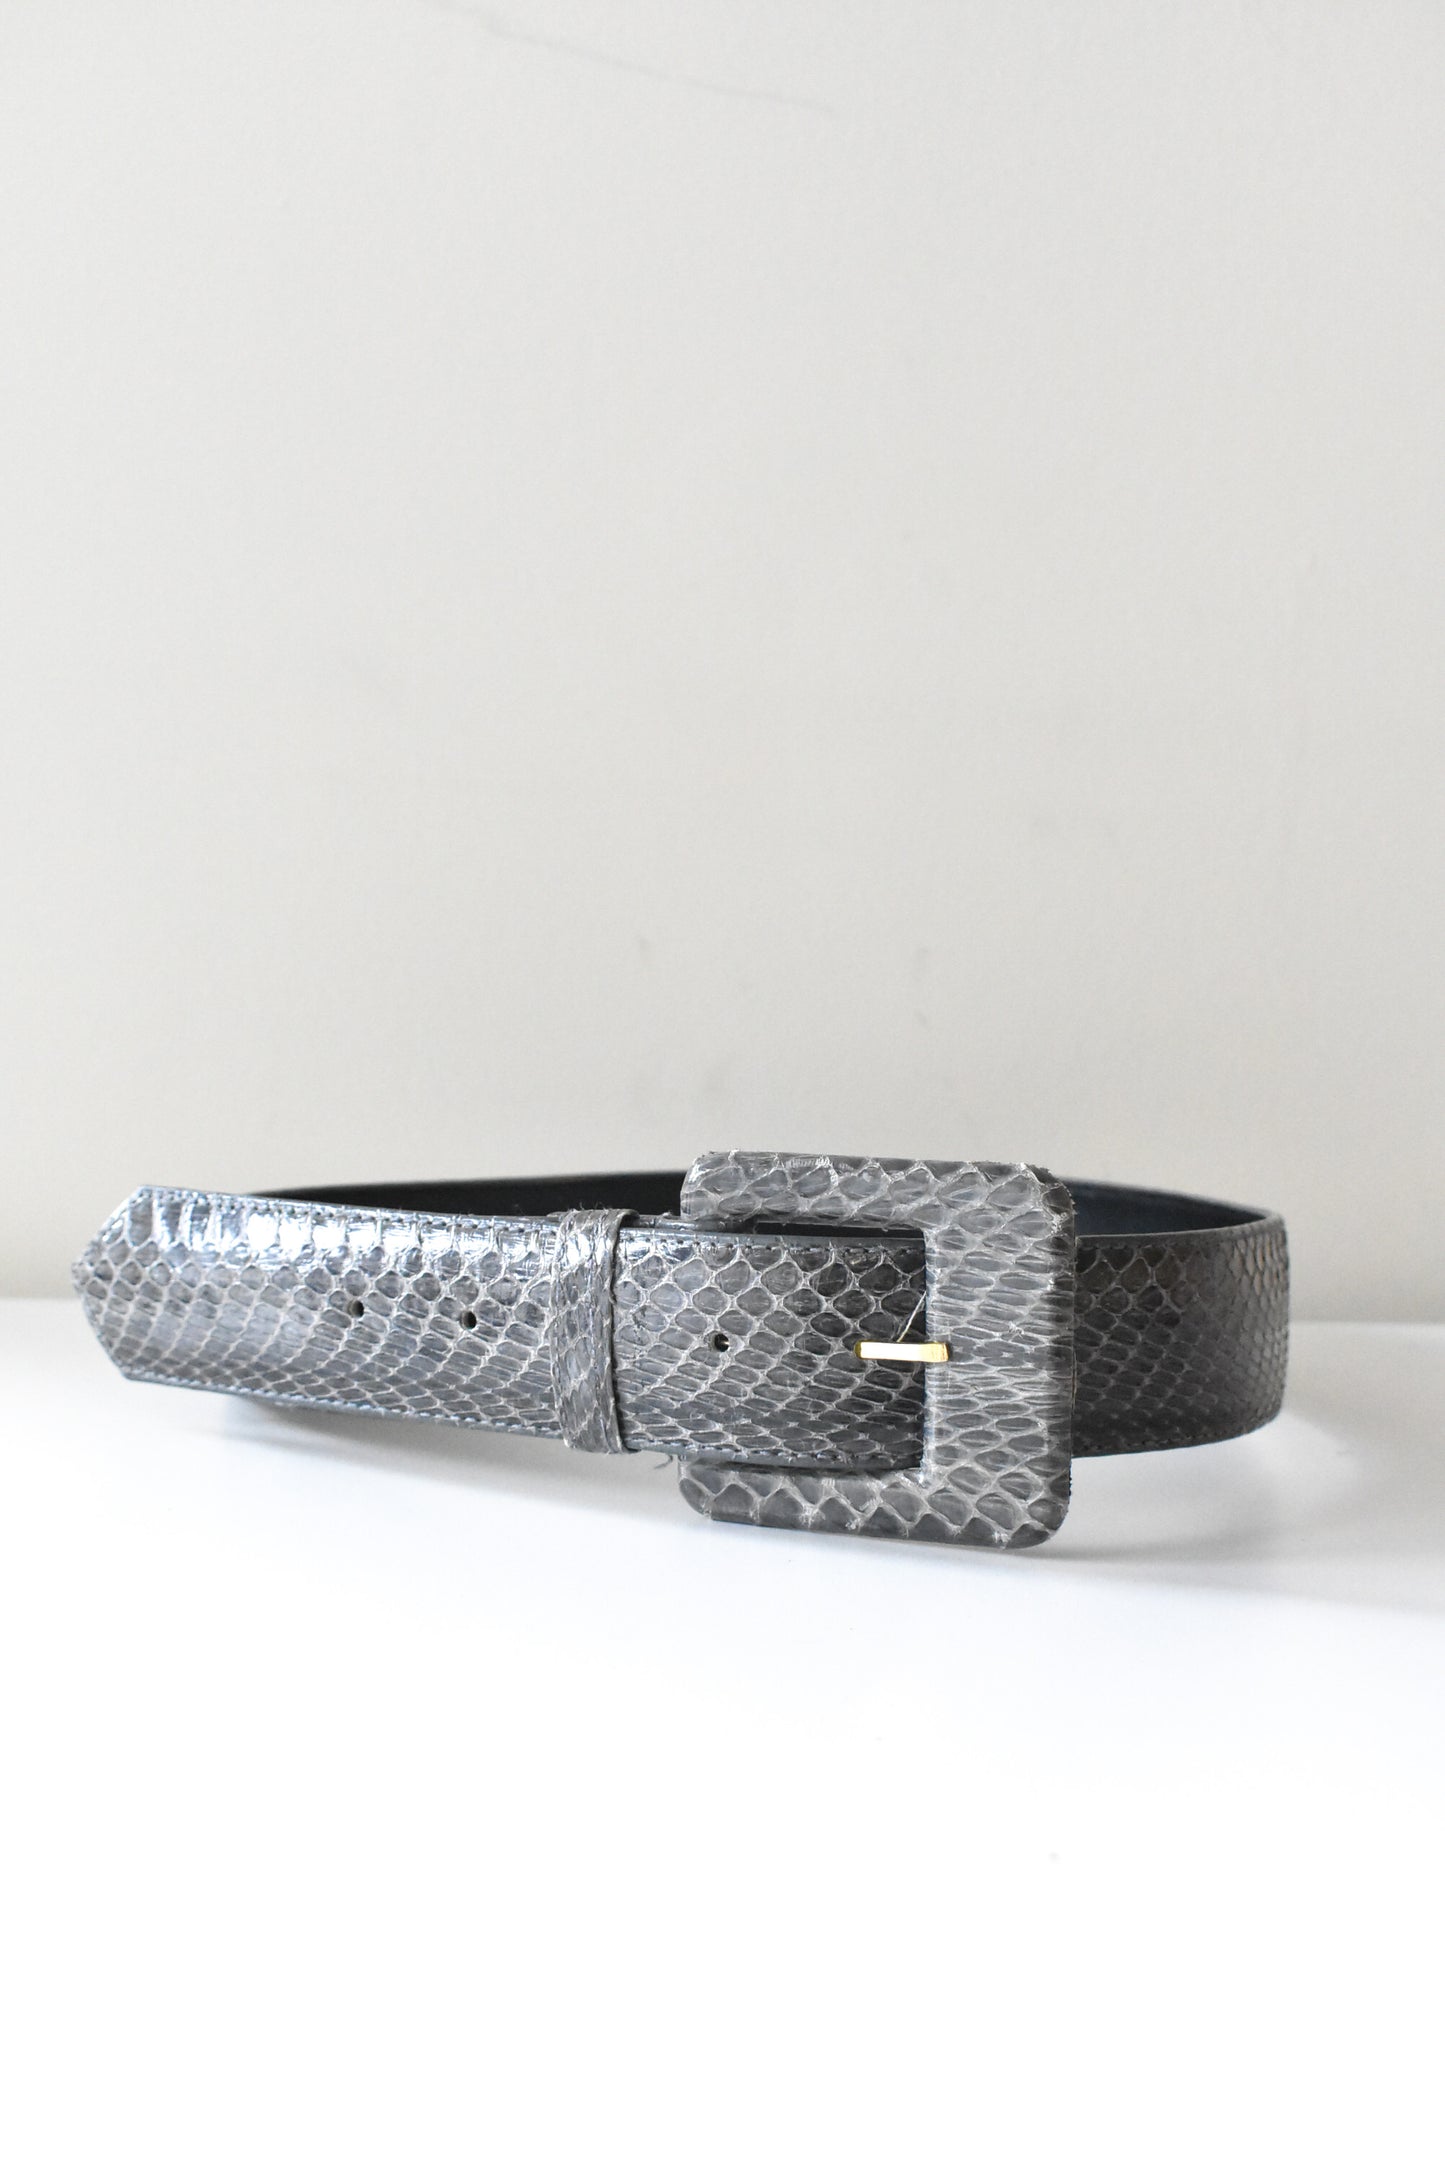 Grey snakeskin retro belt, size M